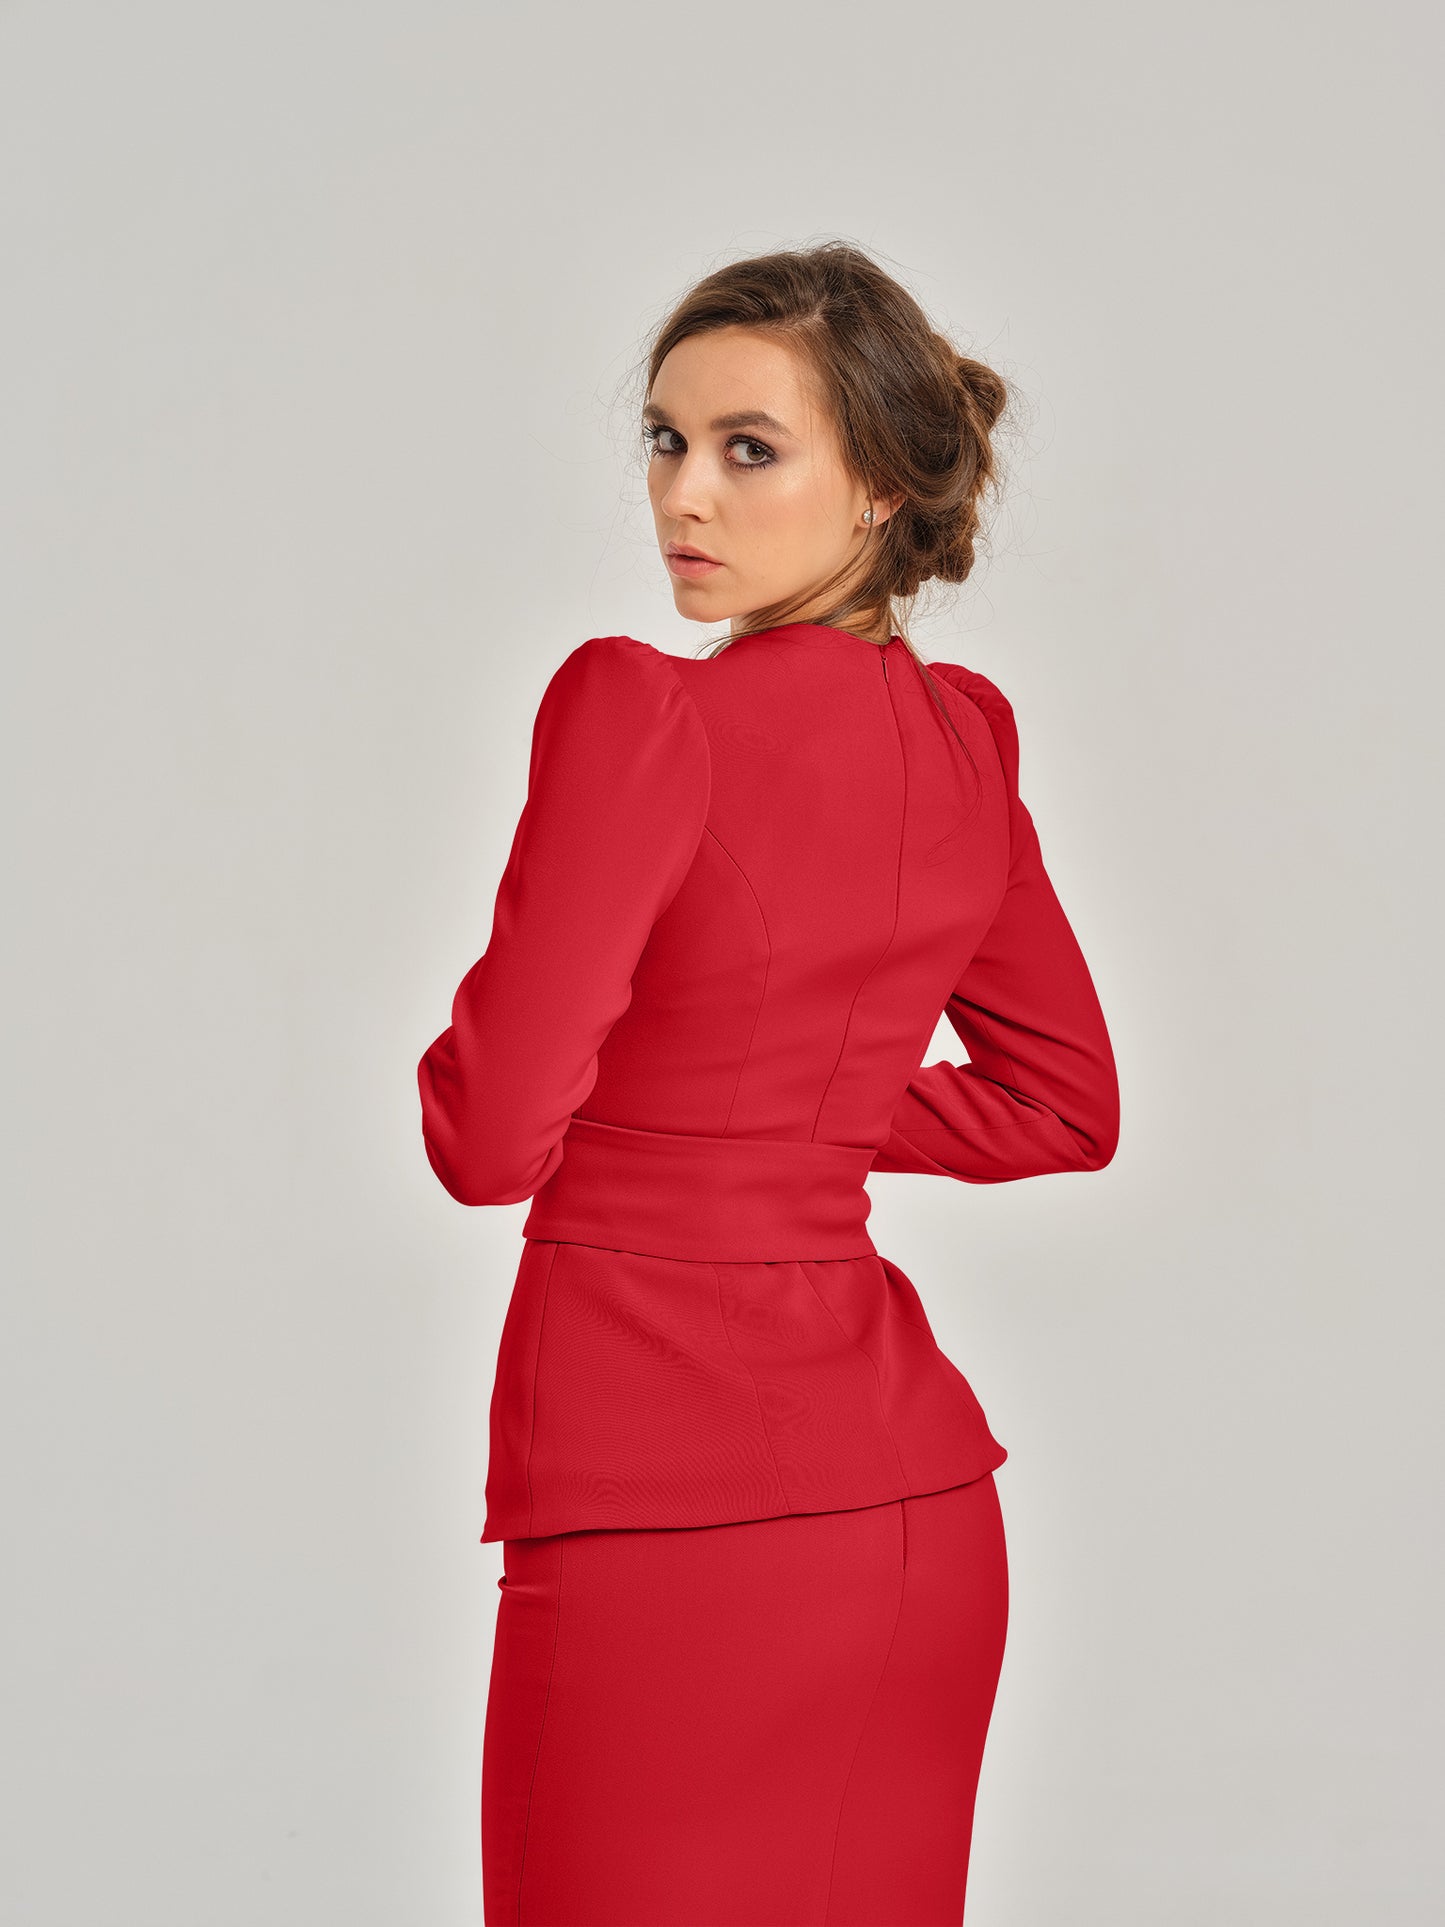 Fierce Red Sweetheart Blouse by Tia Dorraine Women's Luxury Fashion Designer Clothing Brand